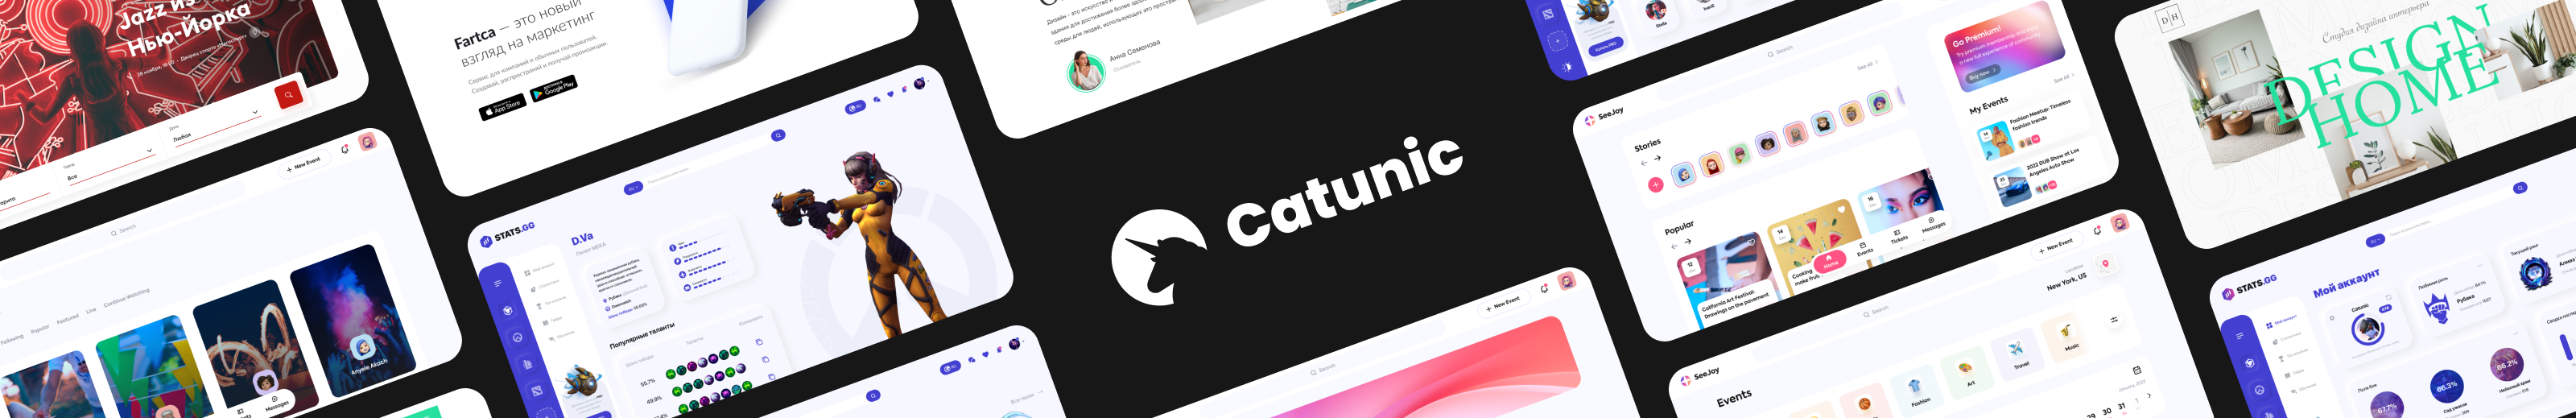 Banner profilu uživatele Catrina Catunic